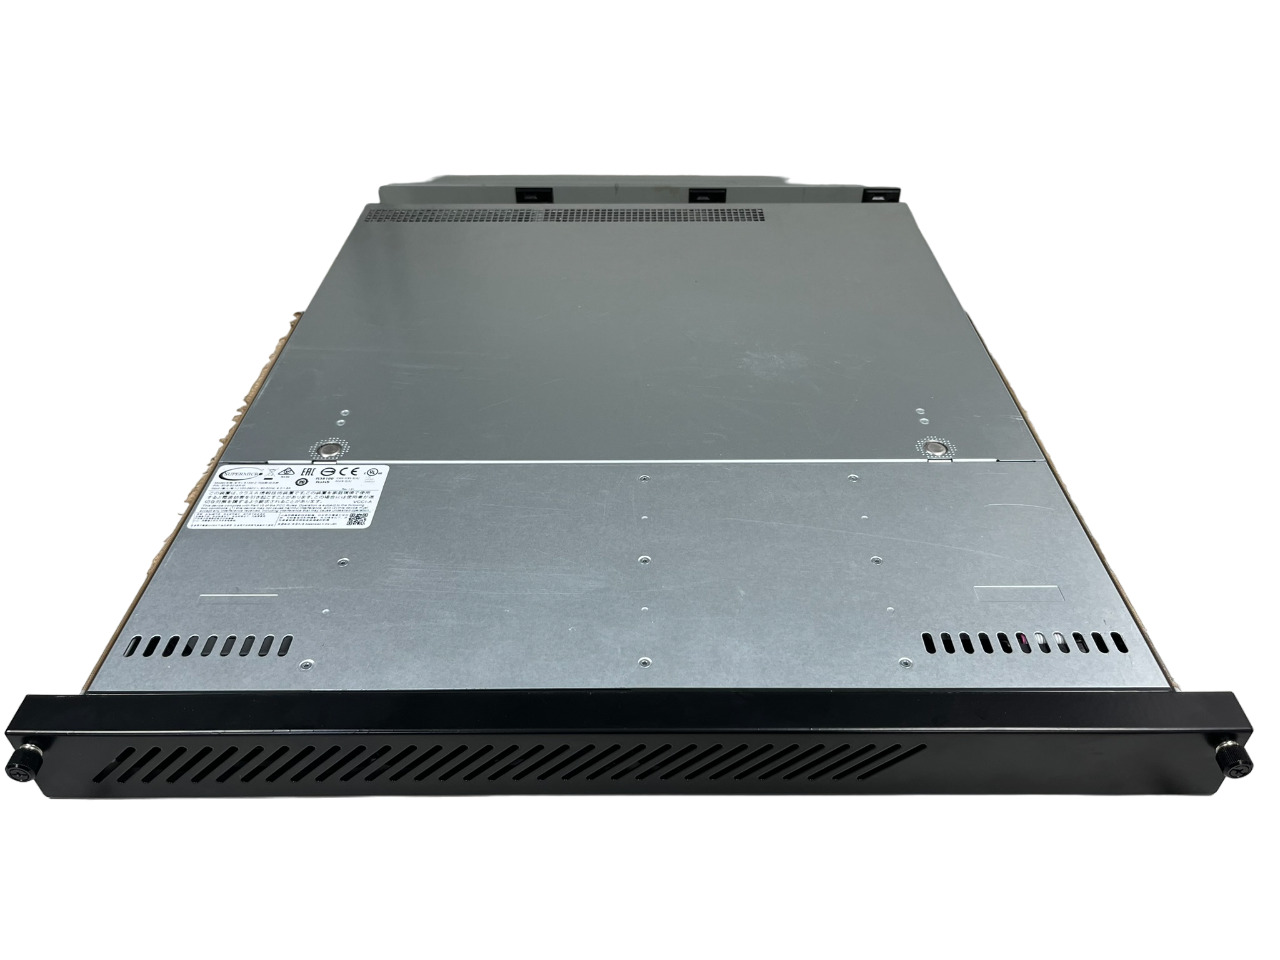 SuperMicro 813M-3 - 1U Server - 64GB DDR4 RAM, E5-2630 V4, Single PSU with rails